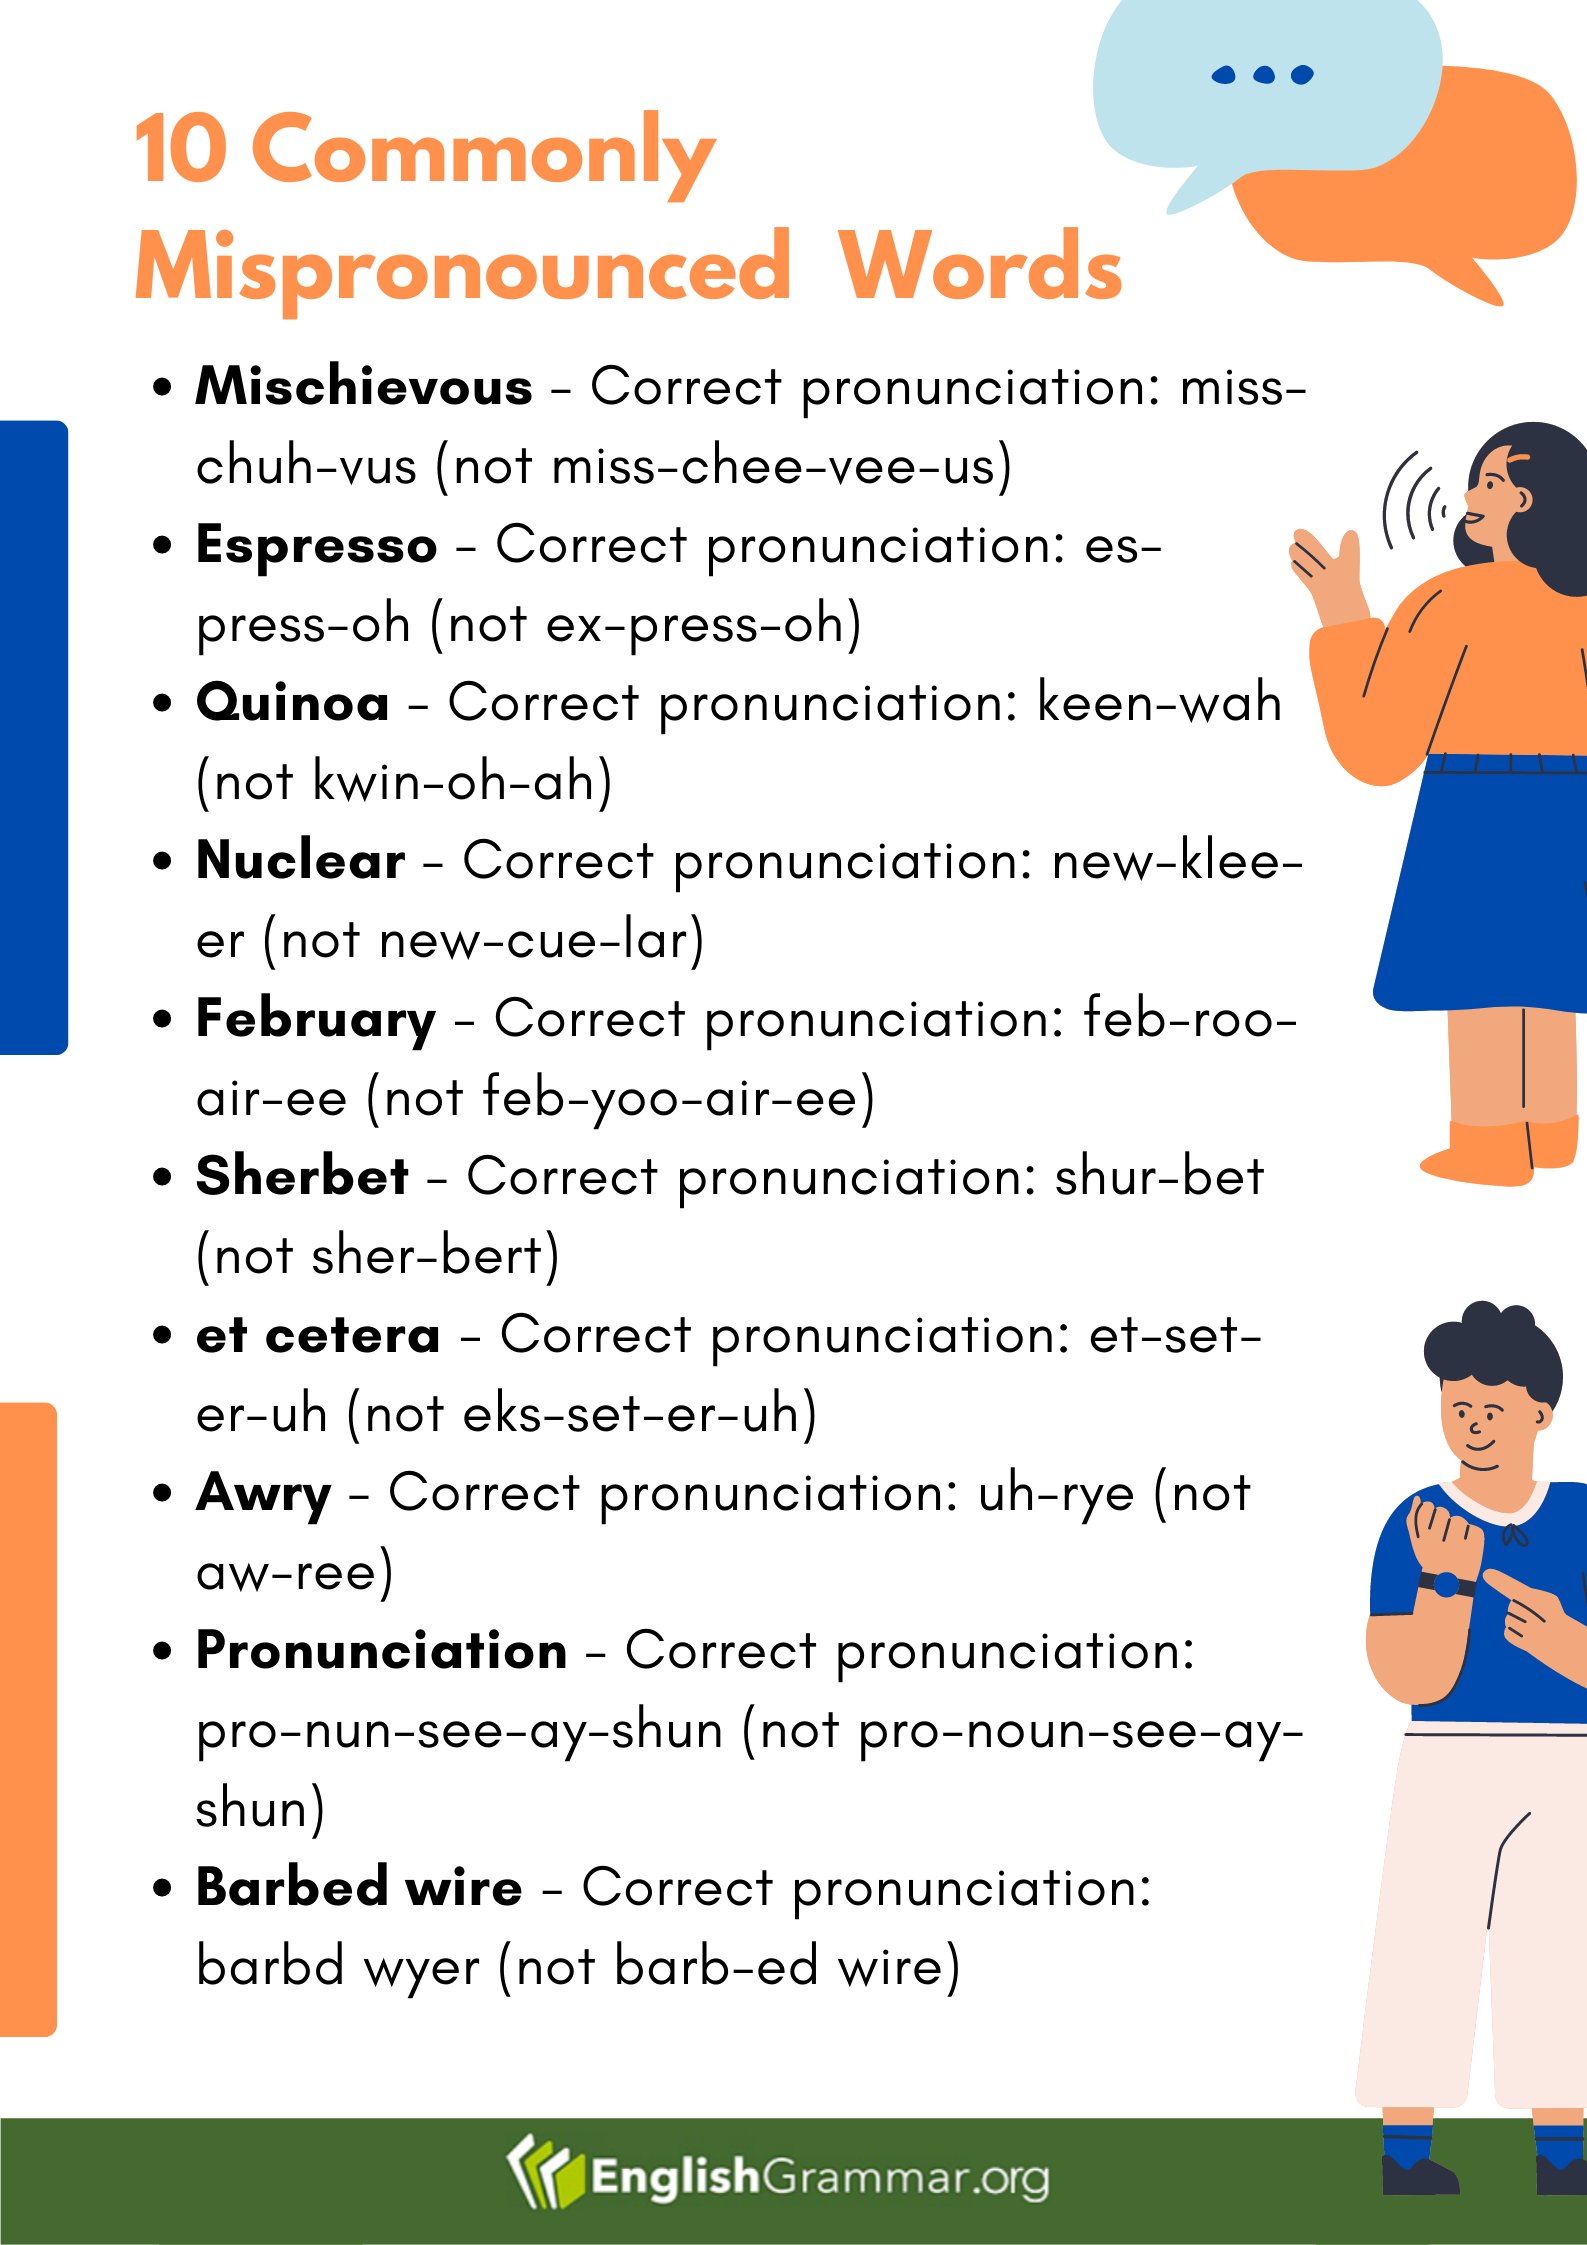 Maldito Relativo lote English Grammar on Twitter: "10 Commonly Mispronounced Words #vocabulary # English #grammar https://t.co/vLRCaTVU2S" / Twitter